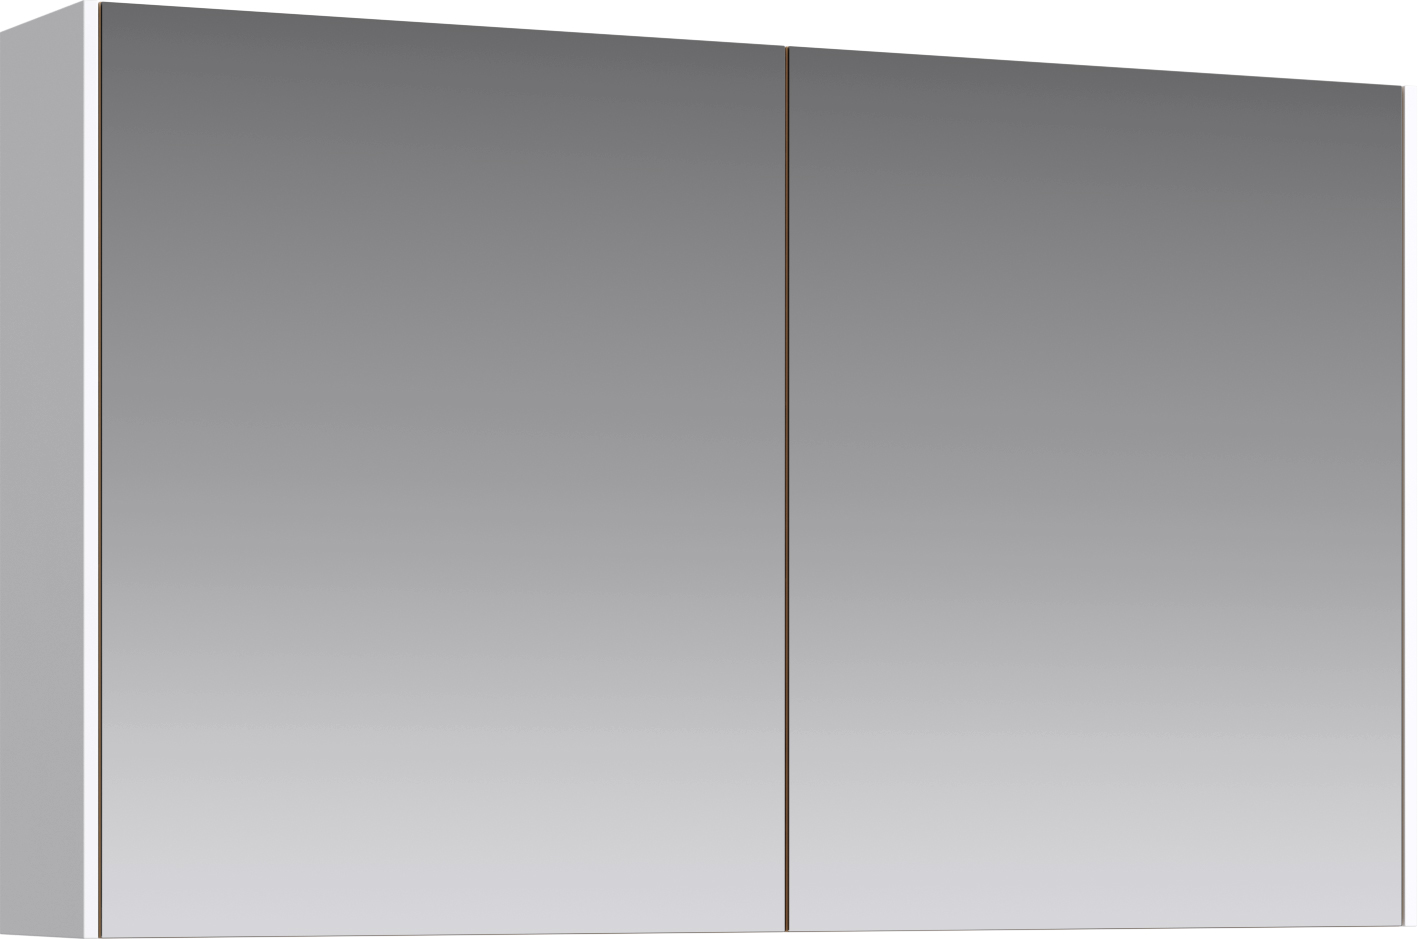 Сменный элемент Aqwella 5 stars Mobi для зеркала-шкафа, белый, 2 шт.